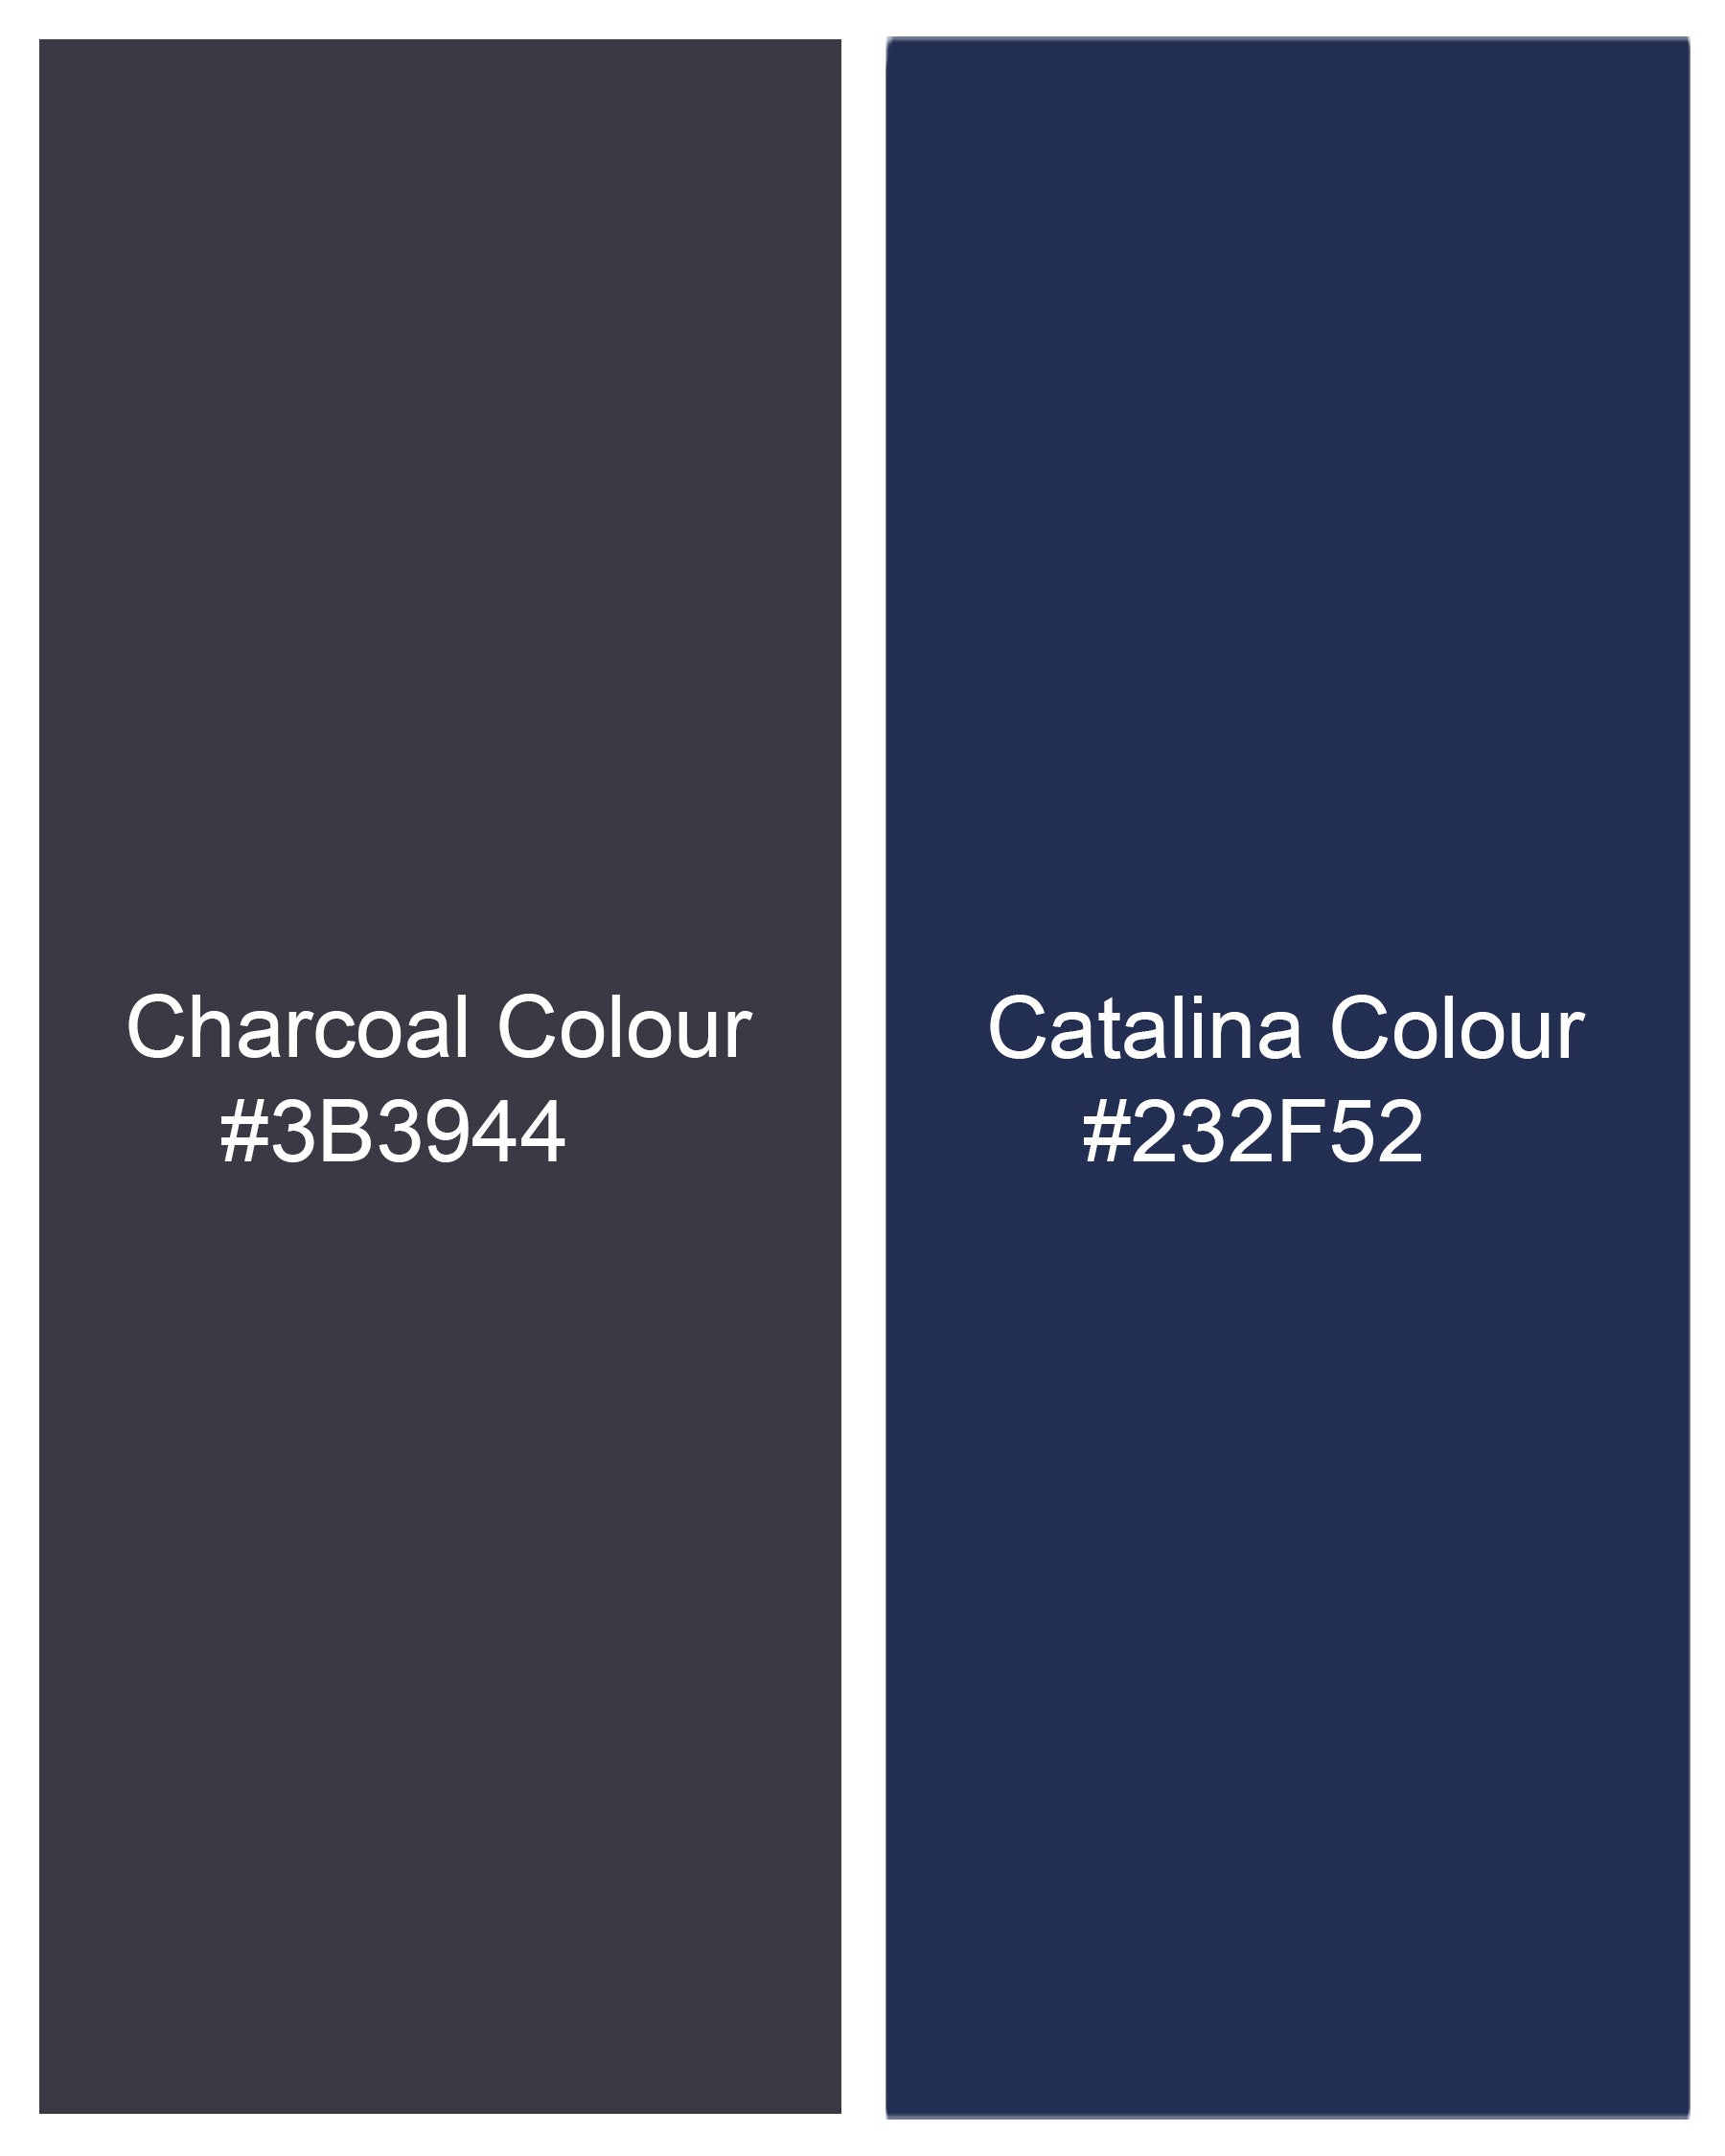 Half Charcoal Grey and Half Catalina Blue Chambray Textured Premium Cotton Hoodie Designer Shirt 8166-HD-BLE-P178-38, 8166-HD-BLE-P178-H-38, 8166-HD-BLE-P178-39, 8166-HD-BLE-P178-H-39, 8166-HD-BLE-P178-40, 8166-HD-BLE-P178-H-40, 8166-HD-BLE-P178-42, 8166-HD-BLE-P178-H-42, 8166-HD-BLE-P178-44, 8166-HD-BLE-P178-H-44, 8166-HD-BLE-P178-46, 8166-HD-BLE-P178-H-46, 8166-HD-BLE-P178-48, 8166-HD-BLE-P178-H-48, 8166-HD-BLE-P178-50, 8166-HD-BLE-P178-H-50, 8166-HD-BLE-P178-52, 8166-HD-BLE-P178-H-52